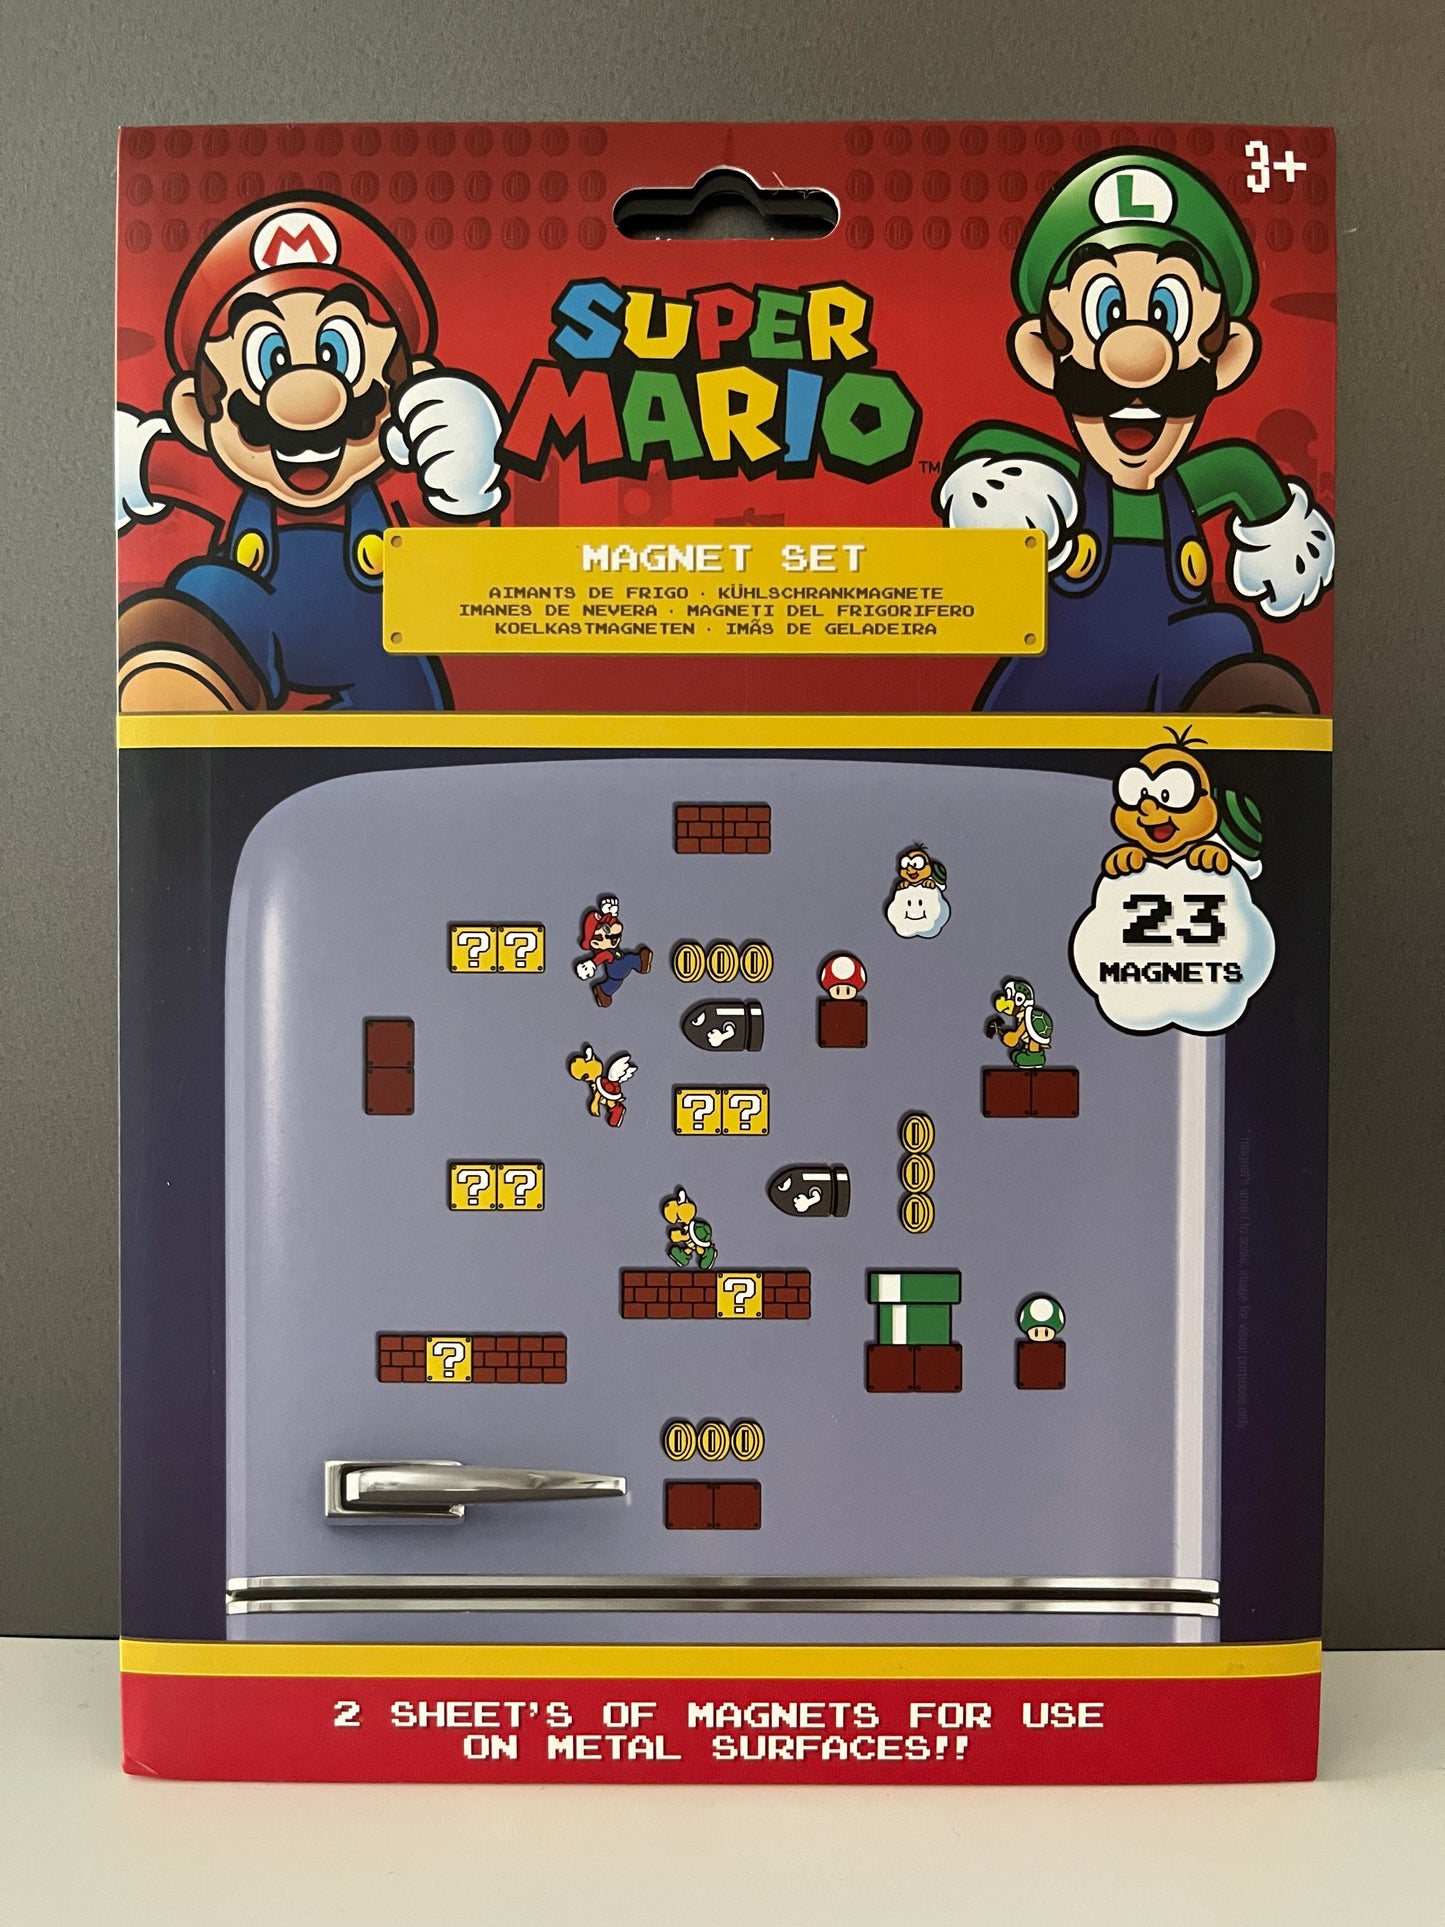 Super Mario magnets set / fridge magnets (23 pieces) Licensed by Nintendo